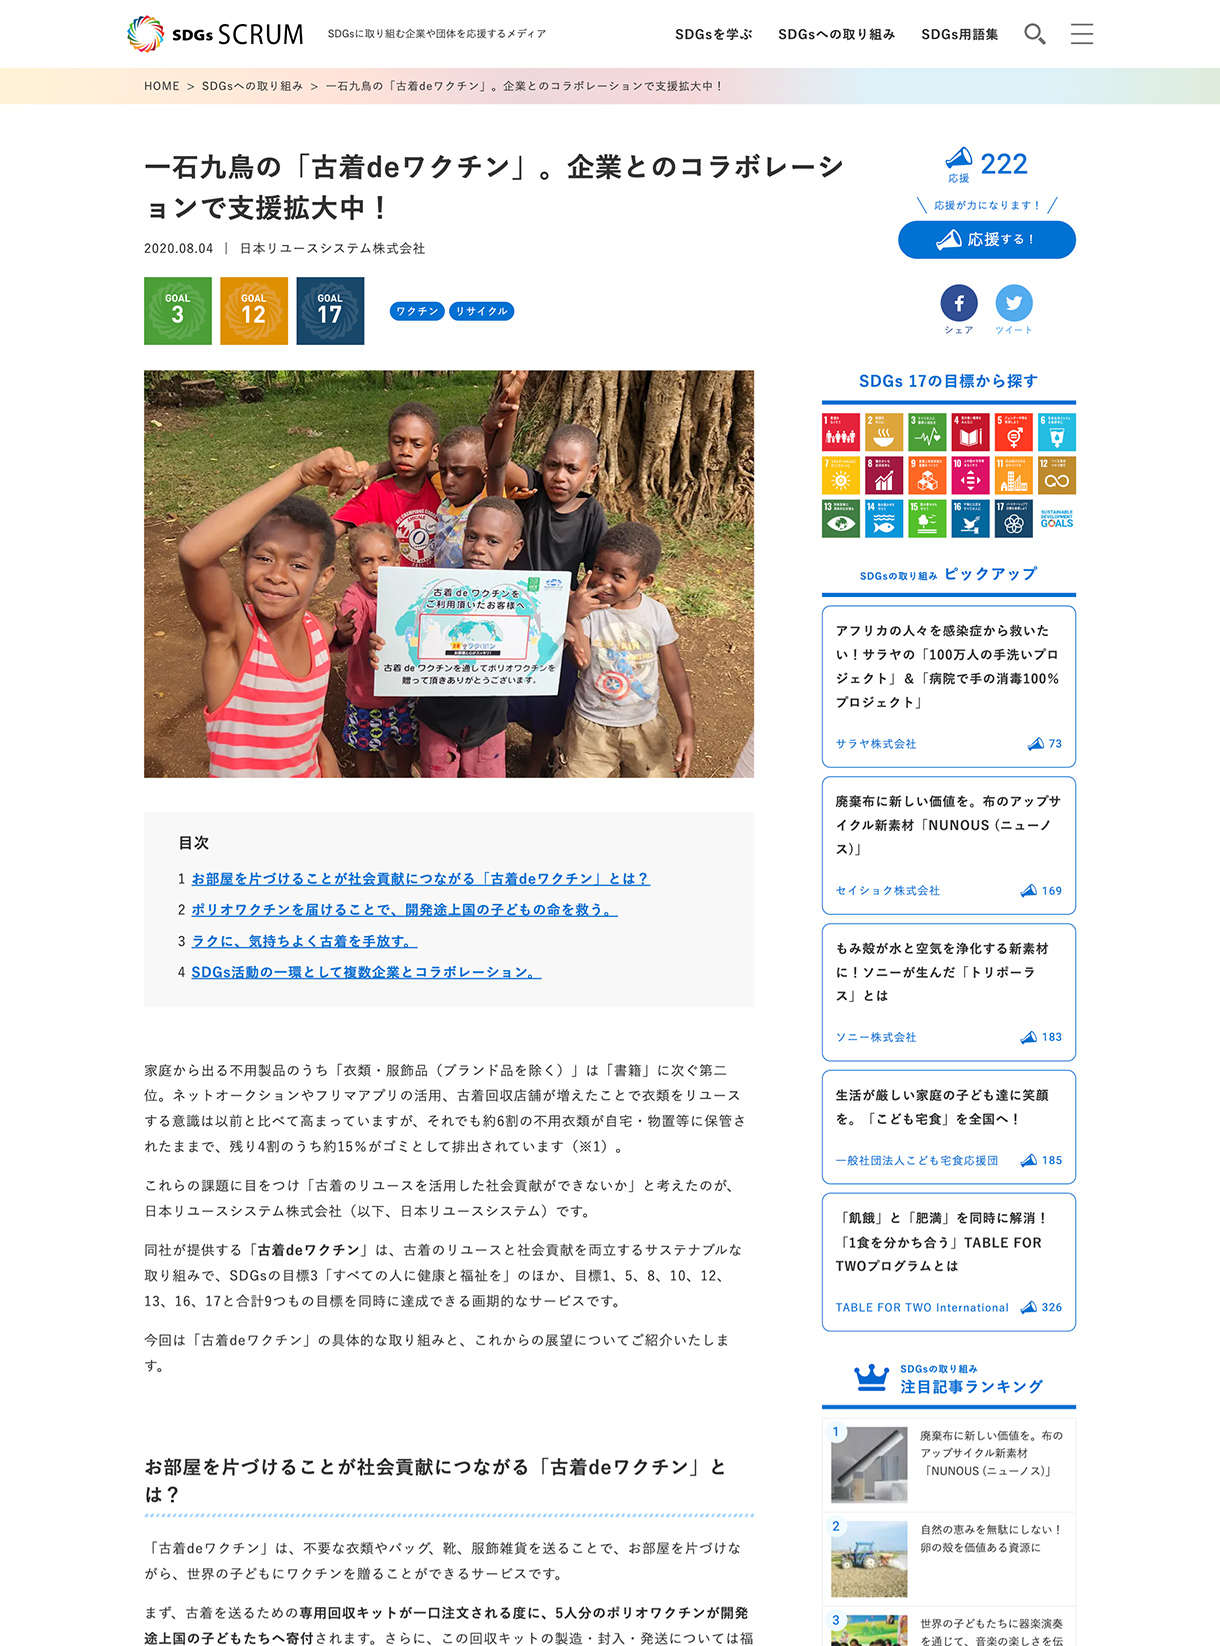 SDGs SCRUM webサイトの画像